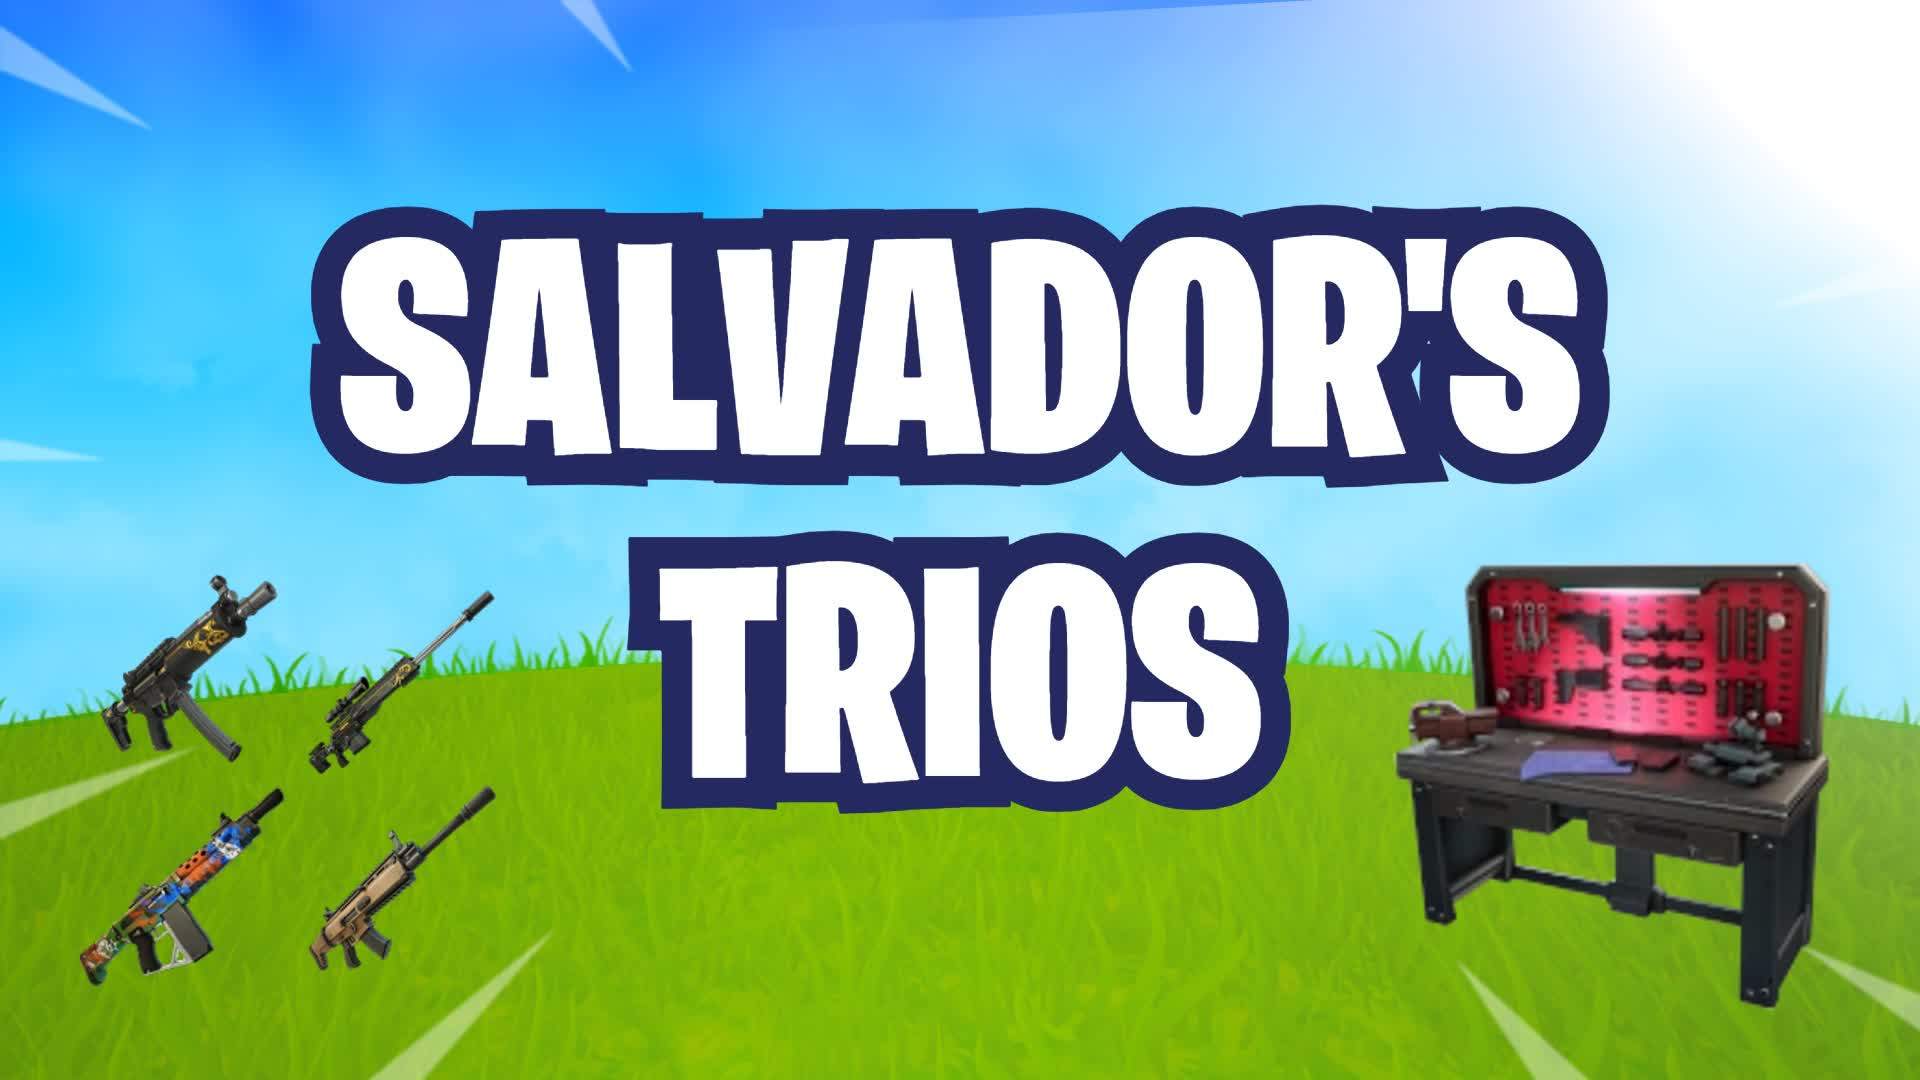 SALVADOR'S TRIOS